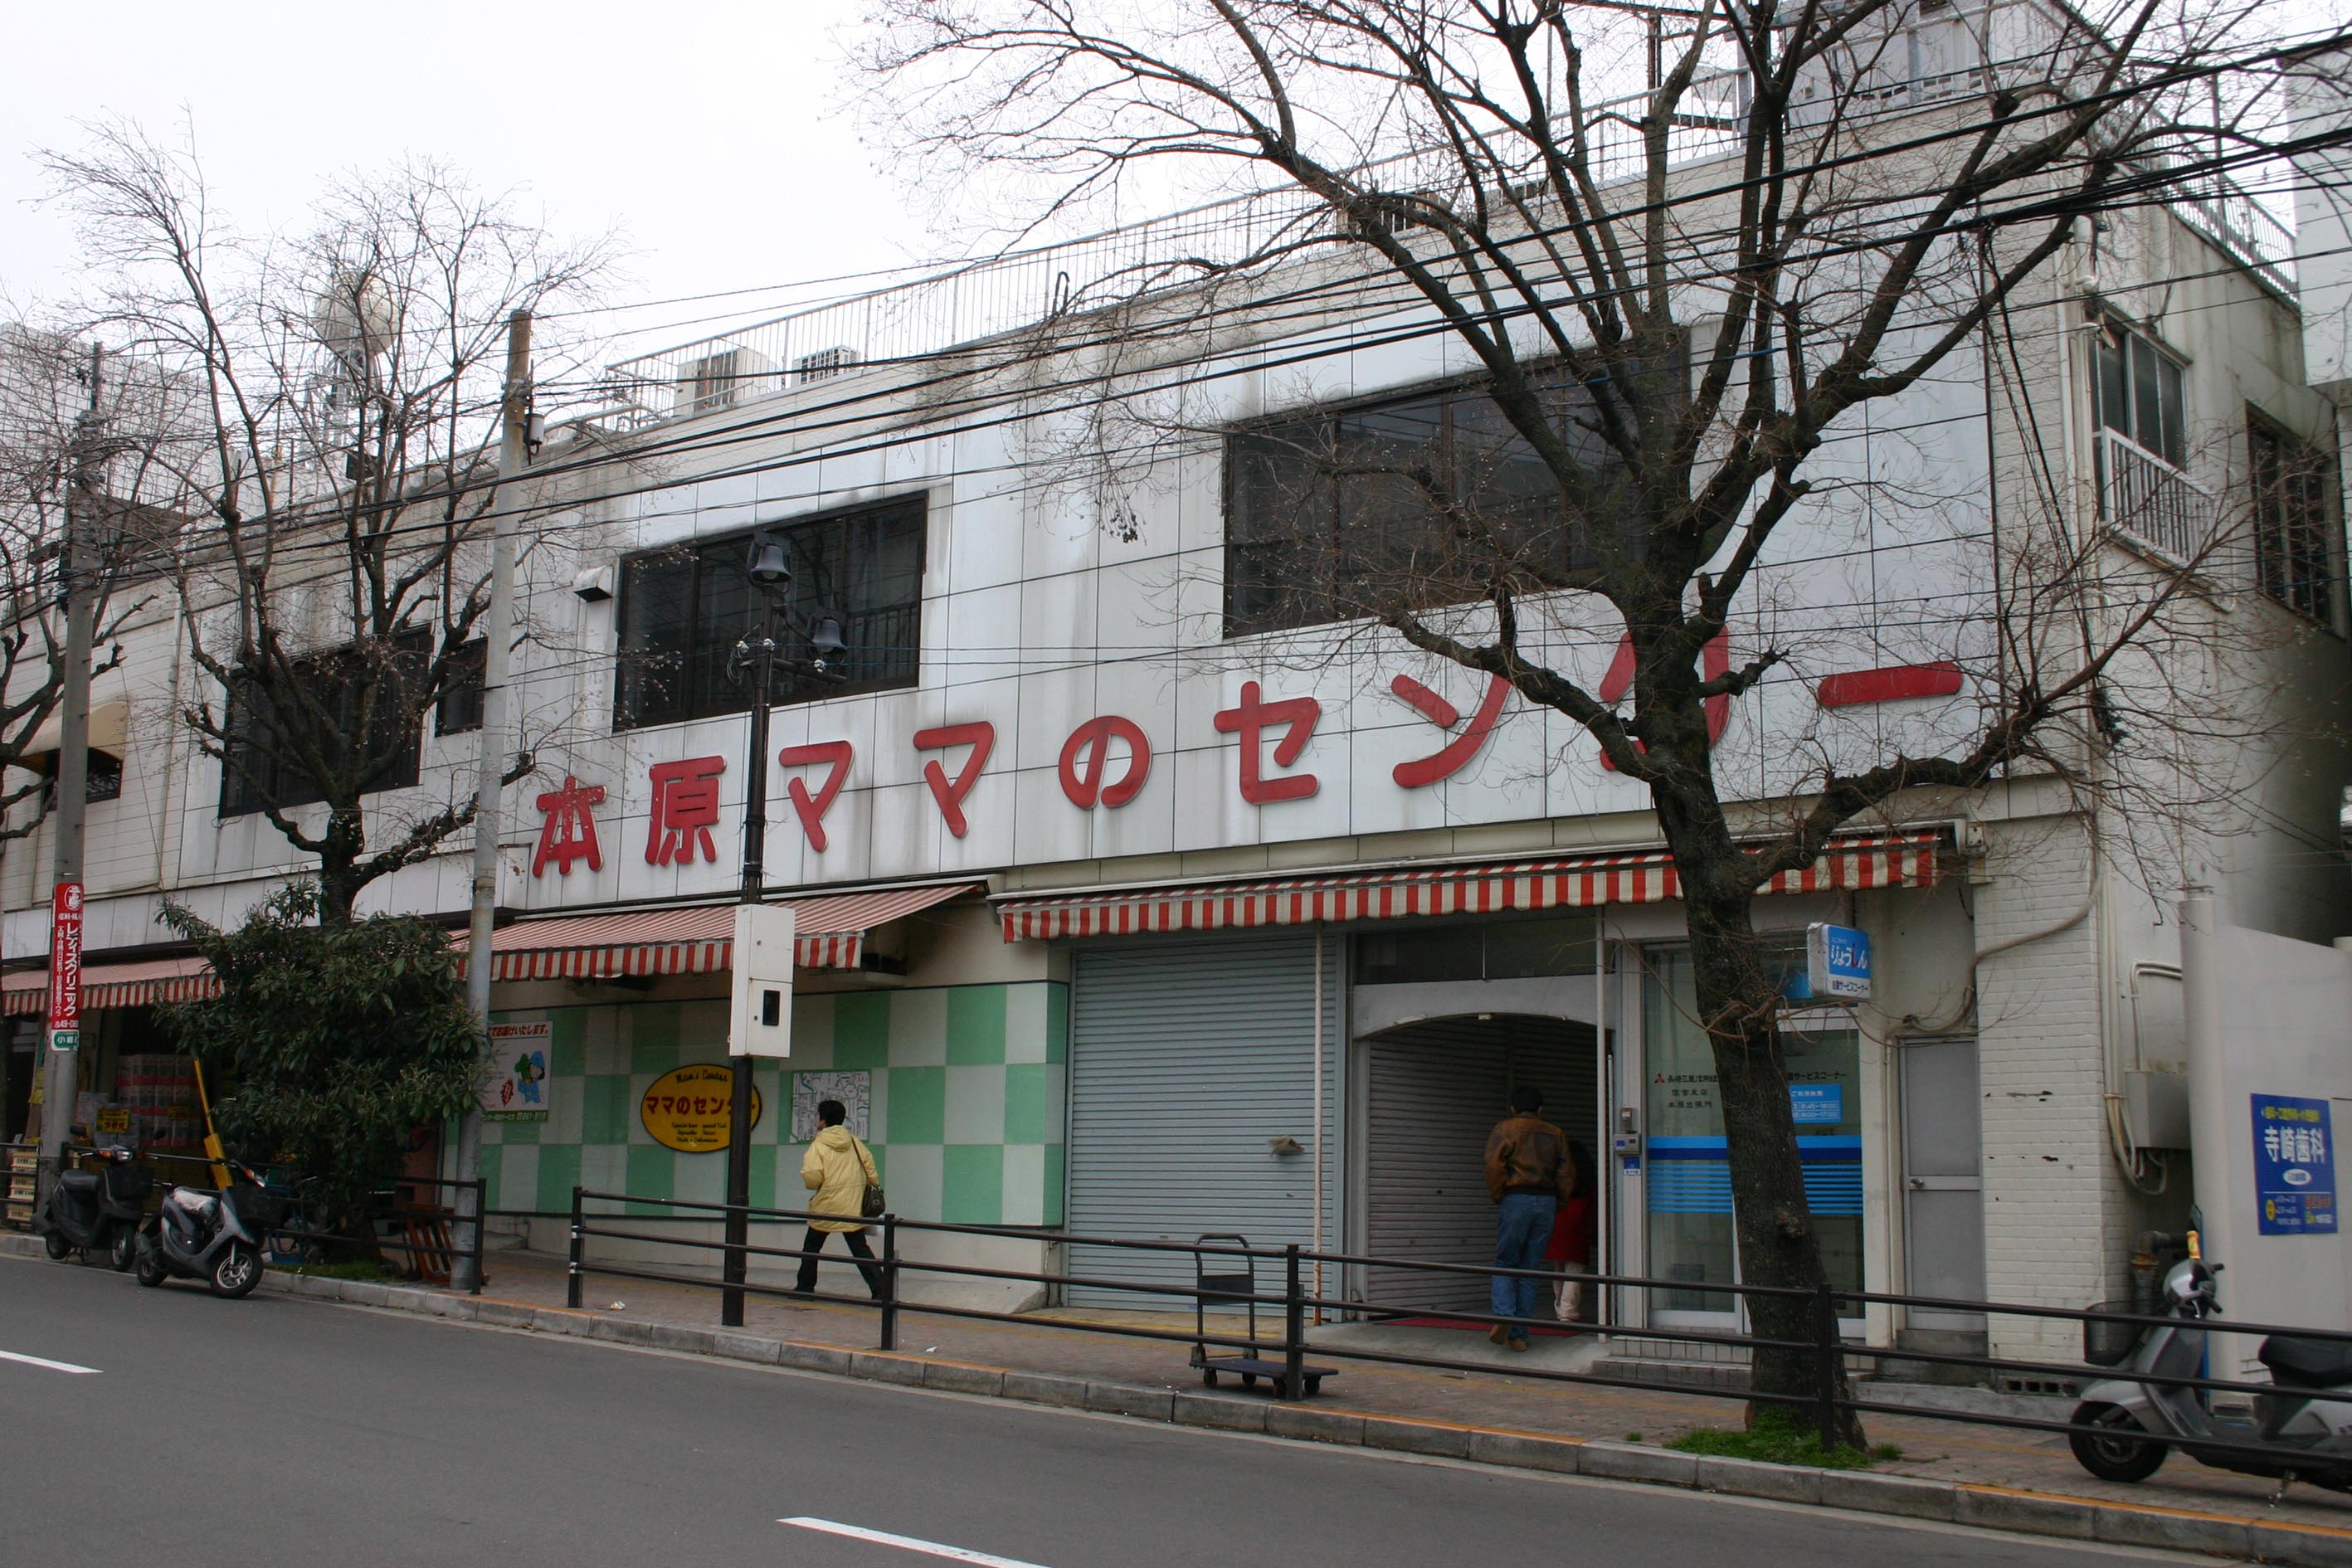 Supermarket. 478m until the mom of center Motohara store (Super)